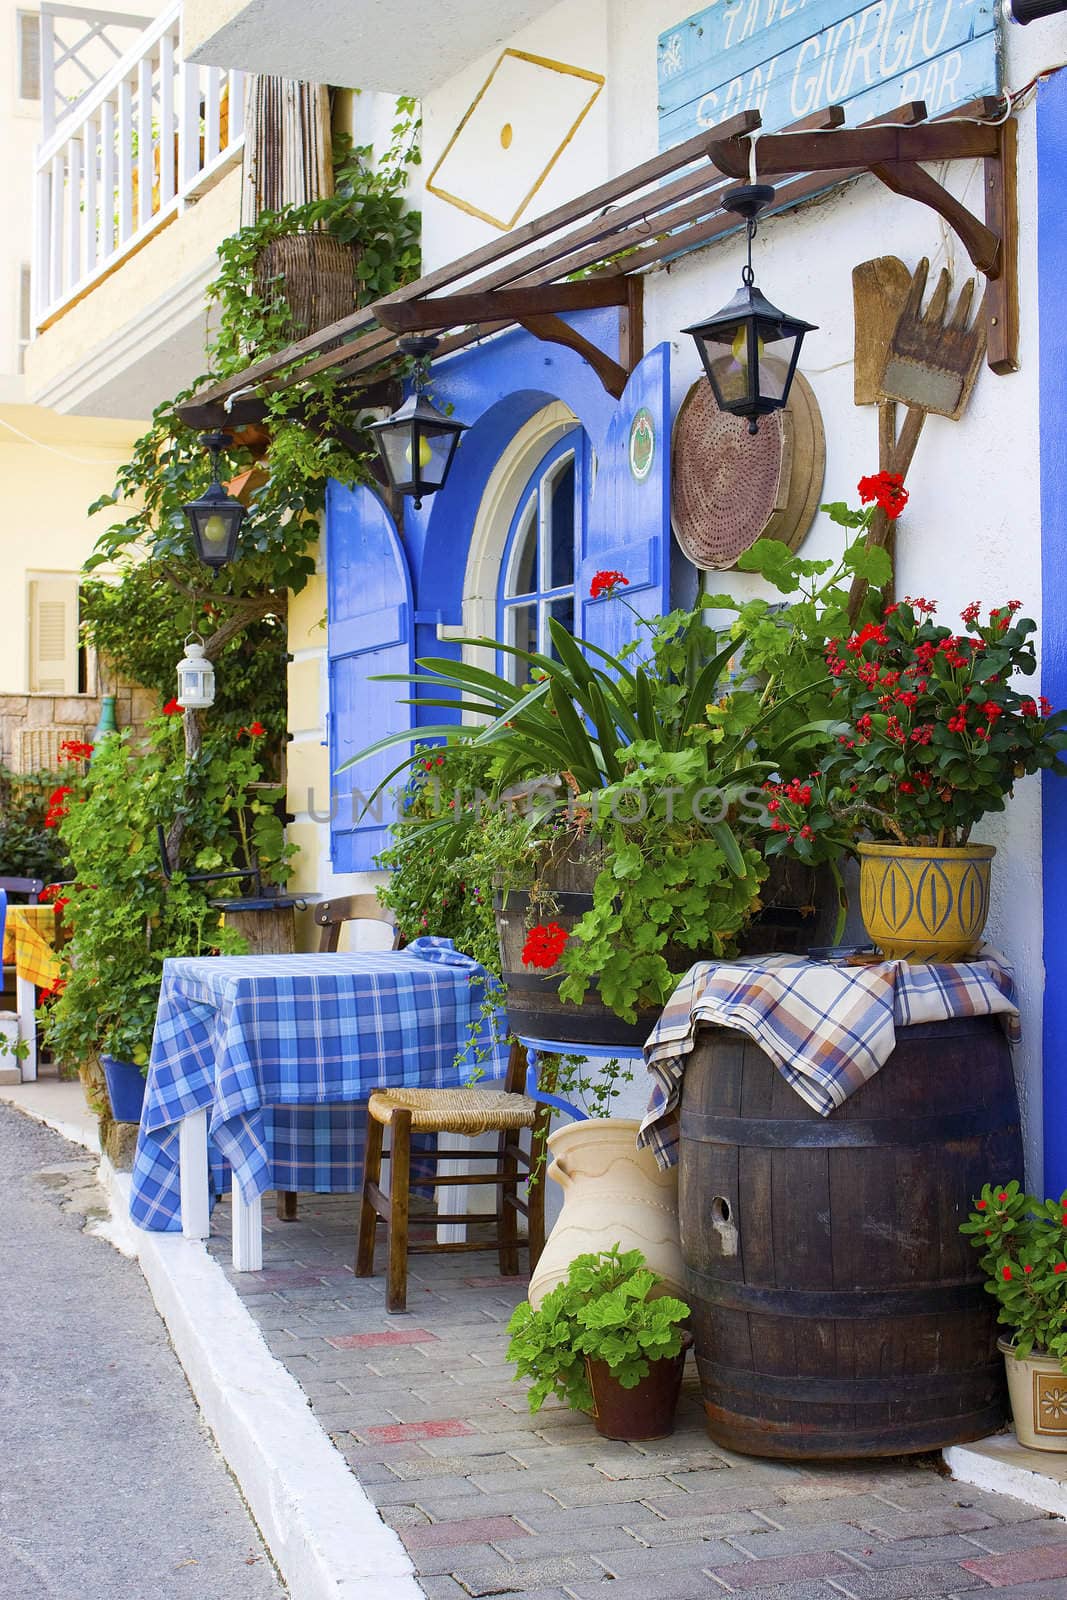 Tables on the street outside Taverna in Malia, Crete